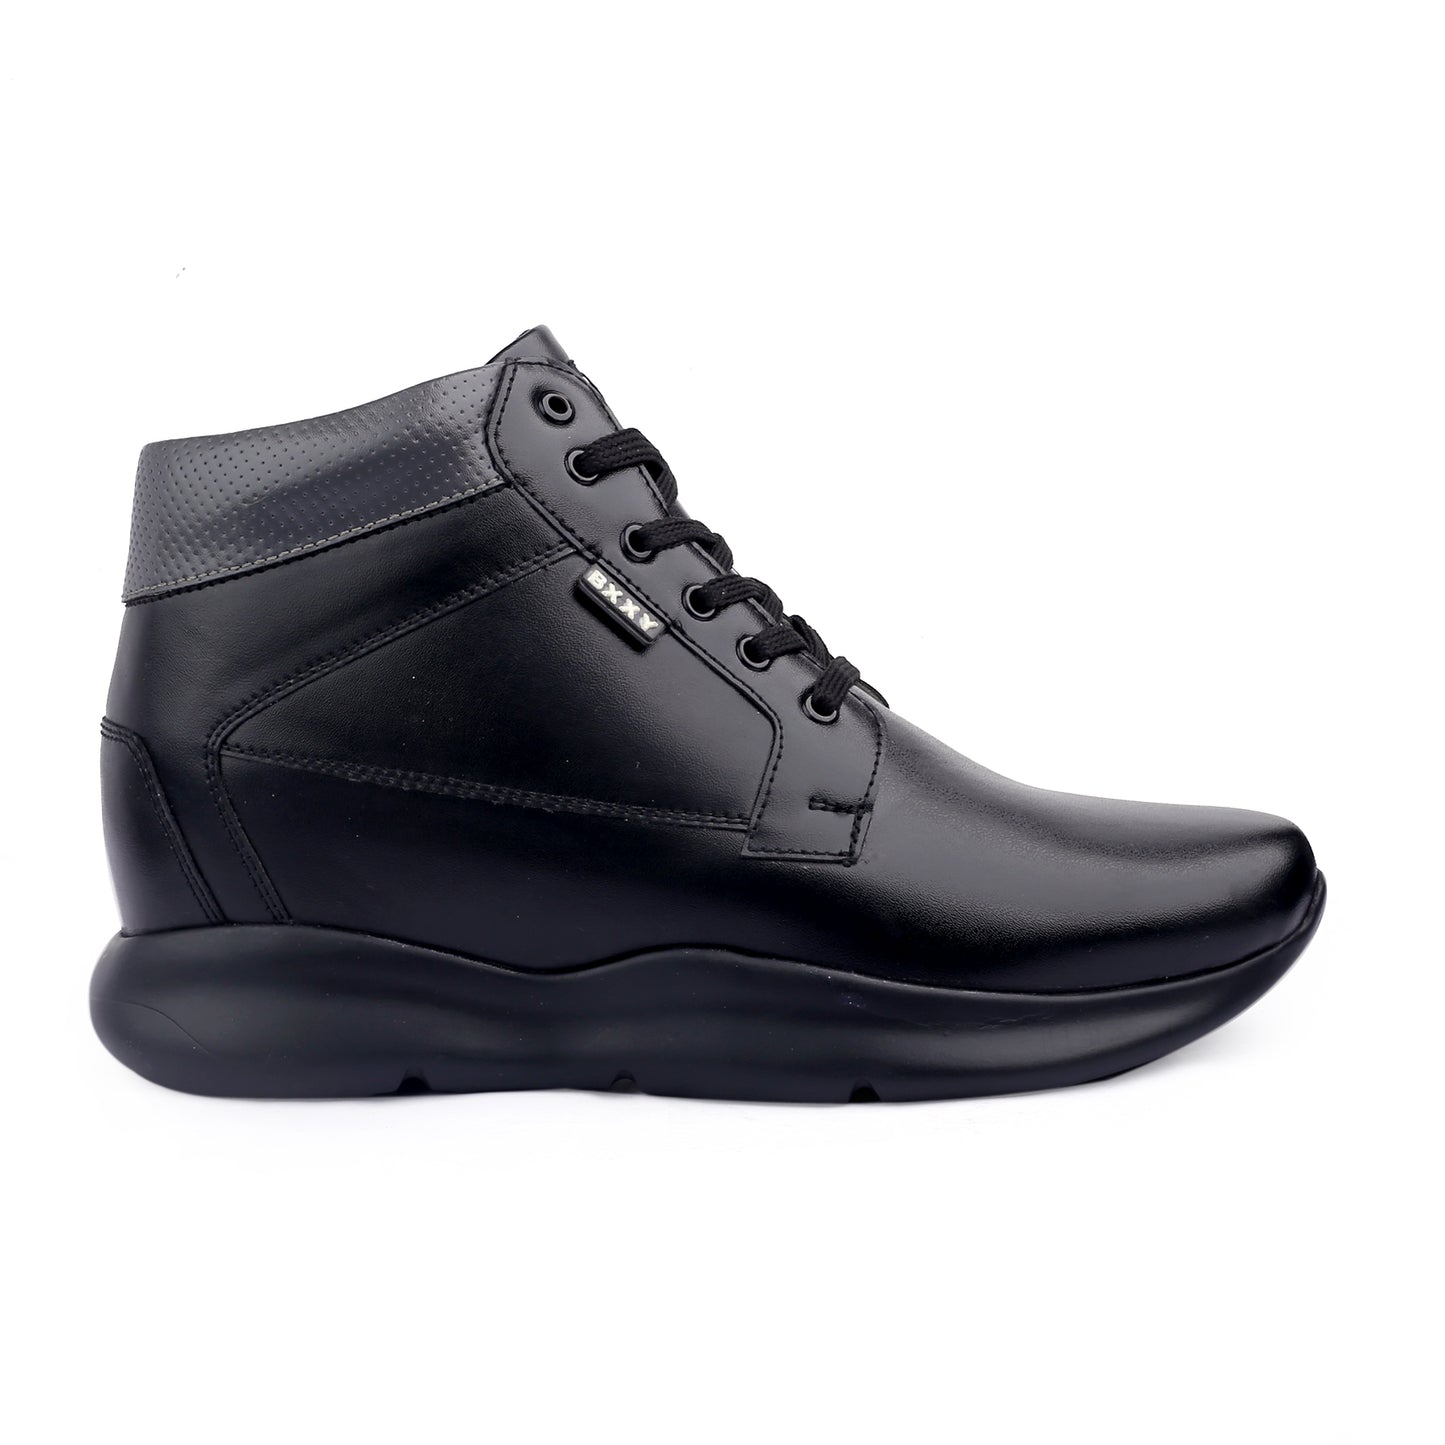 Bxxy's Men 3 Inch Hidden Height Increasing/Elevator Casual Lace-up Outdoor Sneaker Boot